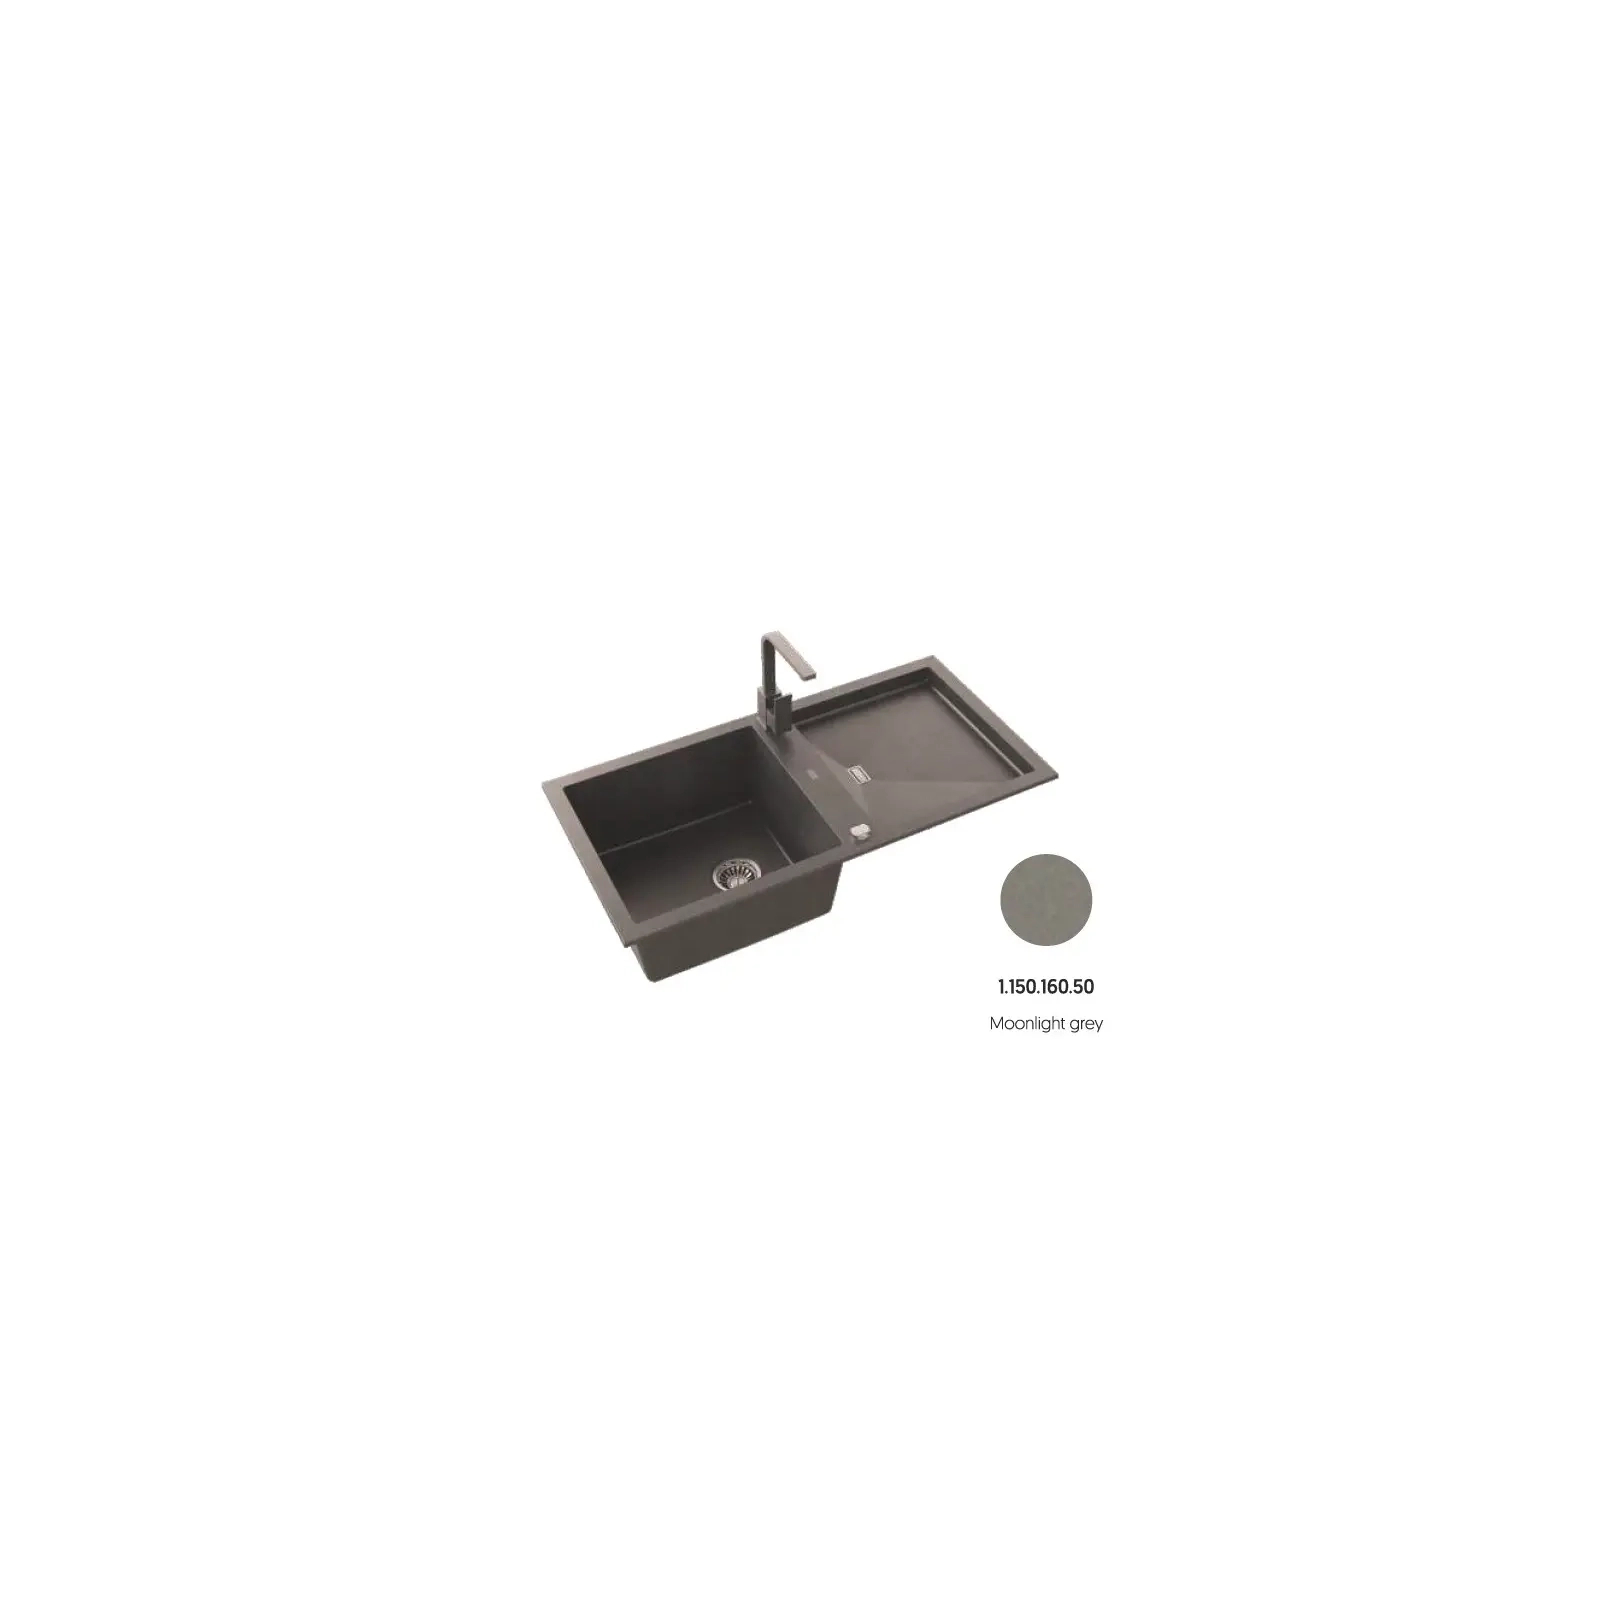 Мойка кухонная Axis Group Slide 200 Moonlight grey 50 (1.150.160.50)